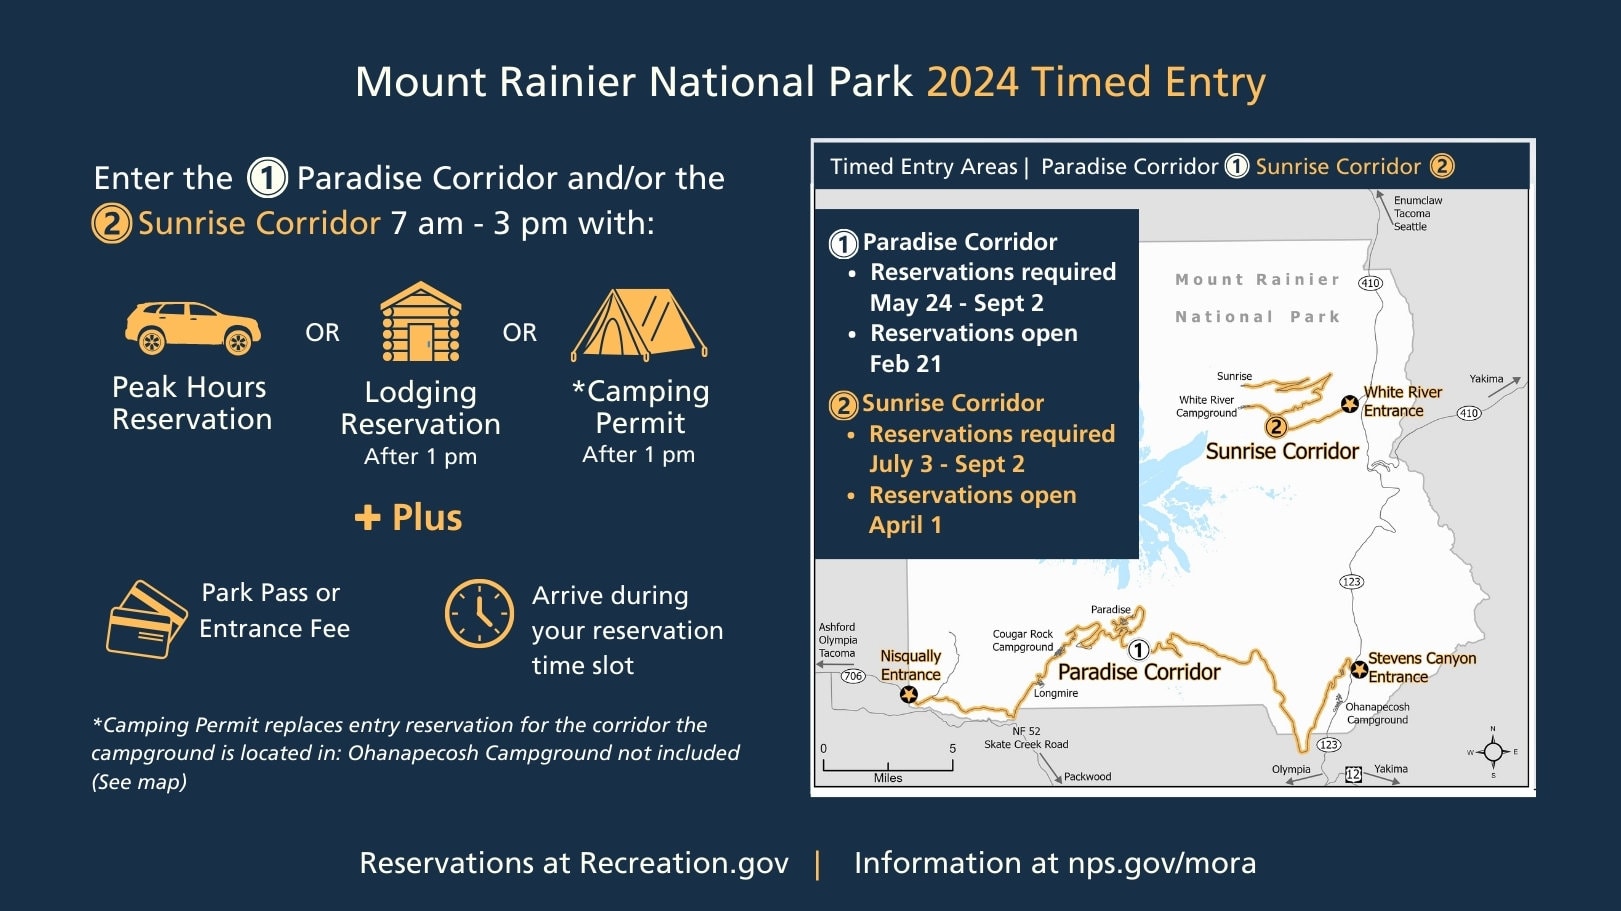 Mount Rainier National Park Timed Entry Reservations Info - Image credit: NPS